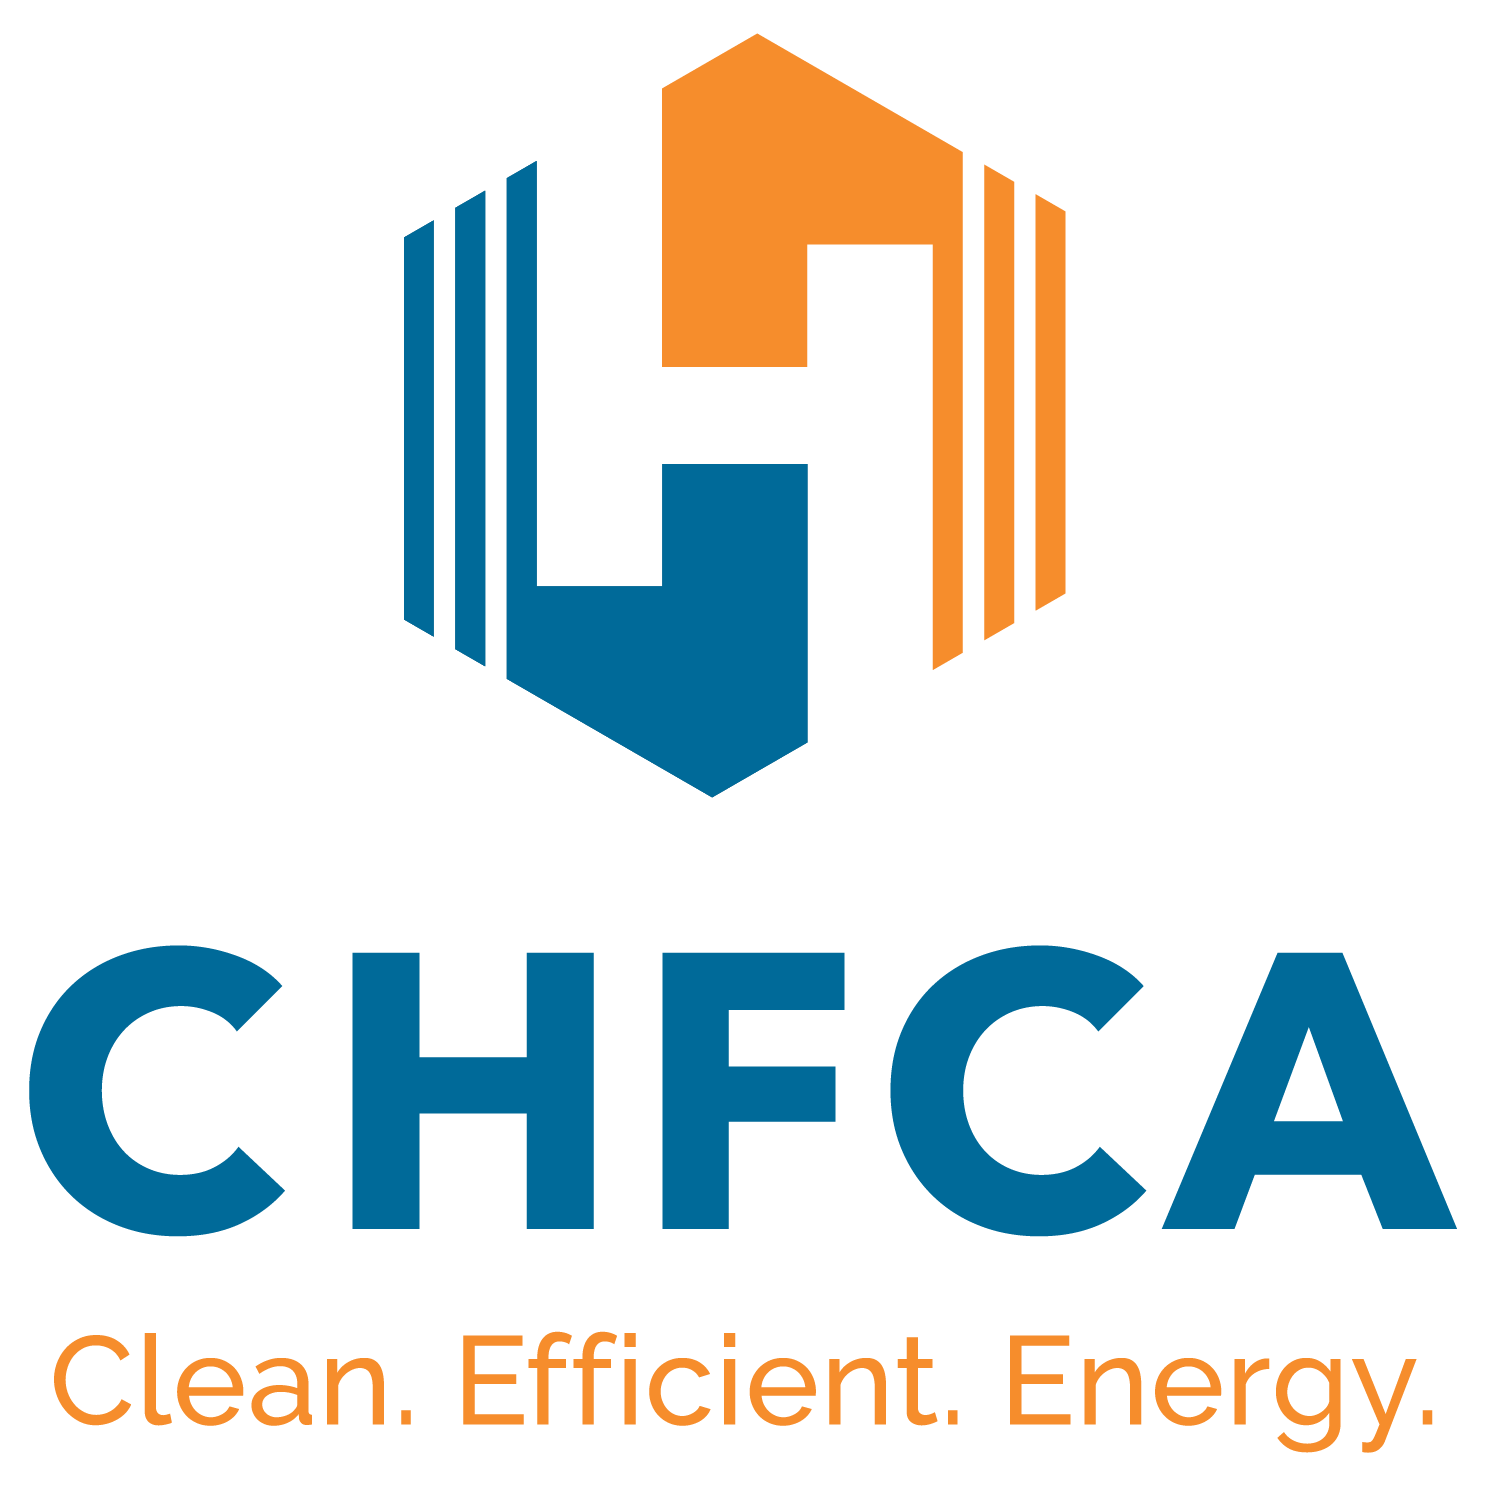 CHFCA Logo